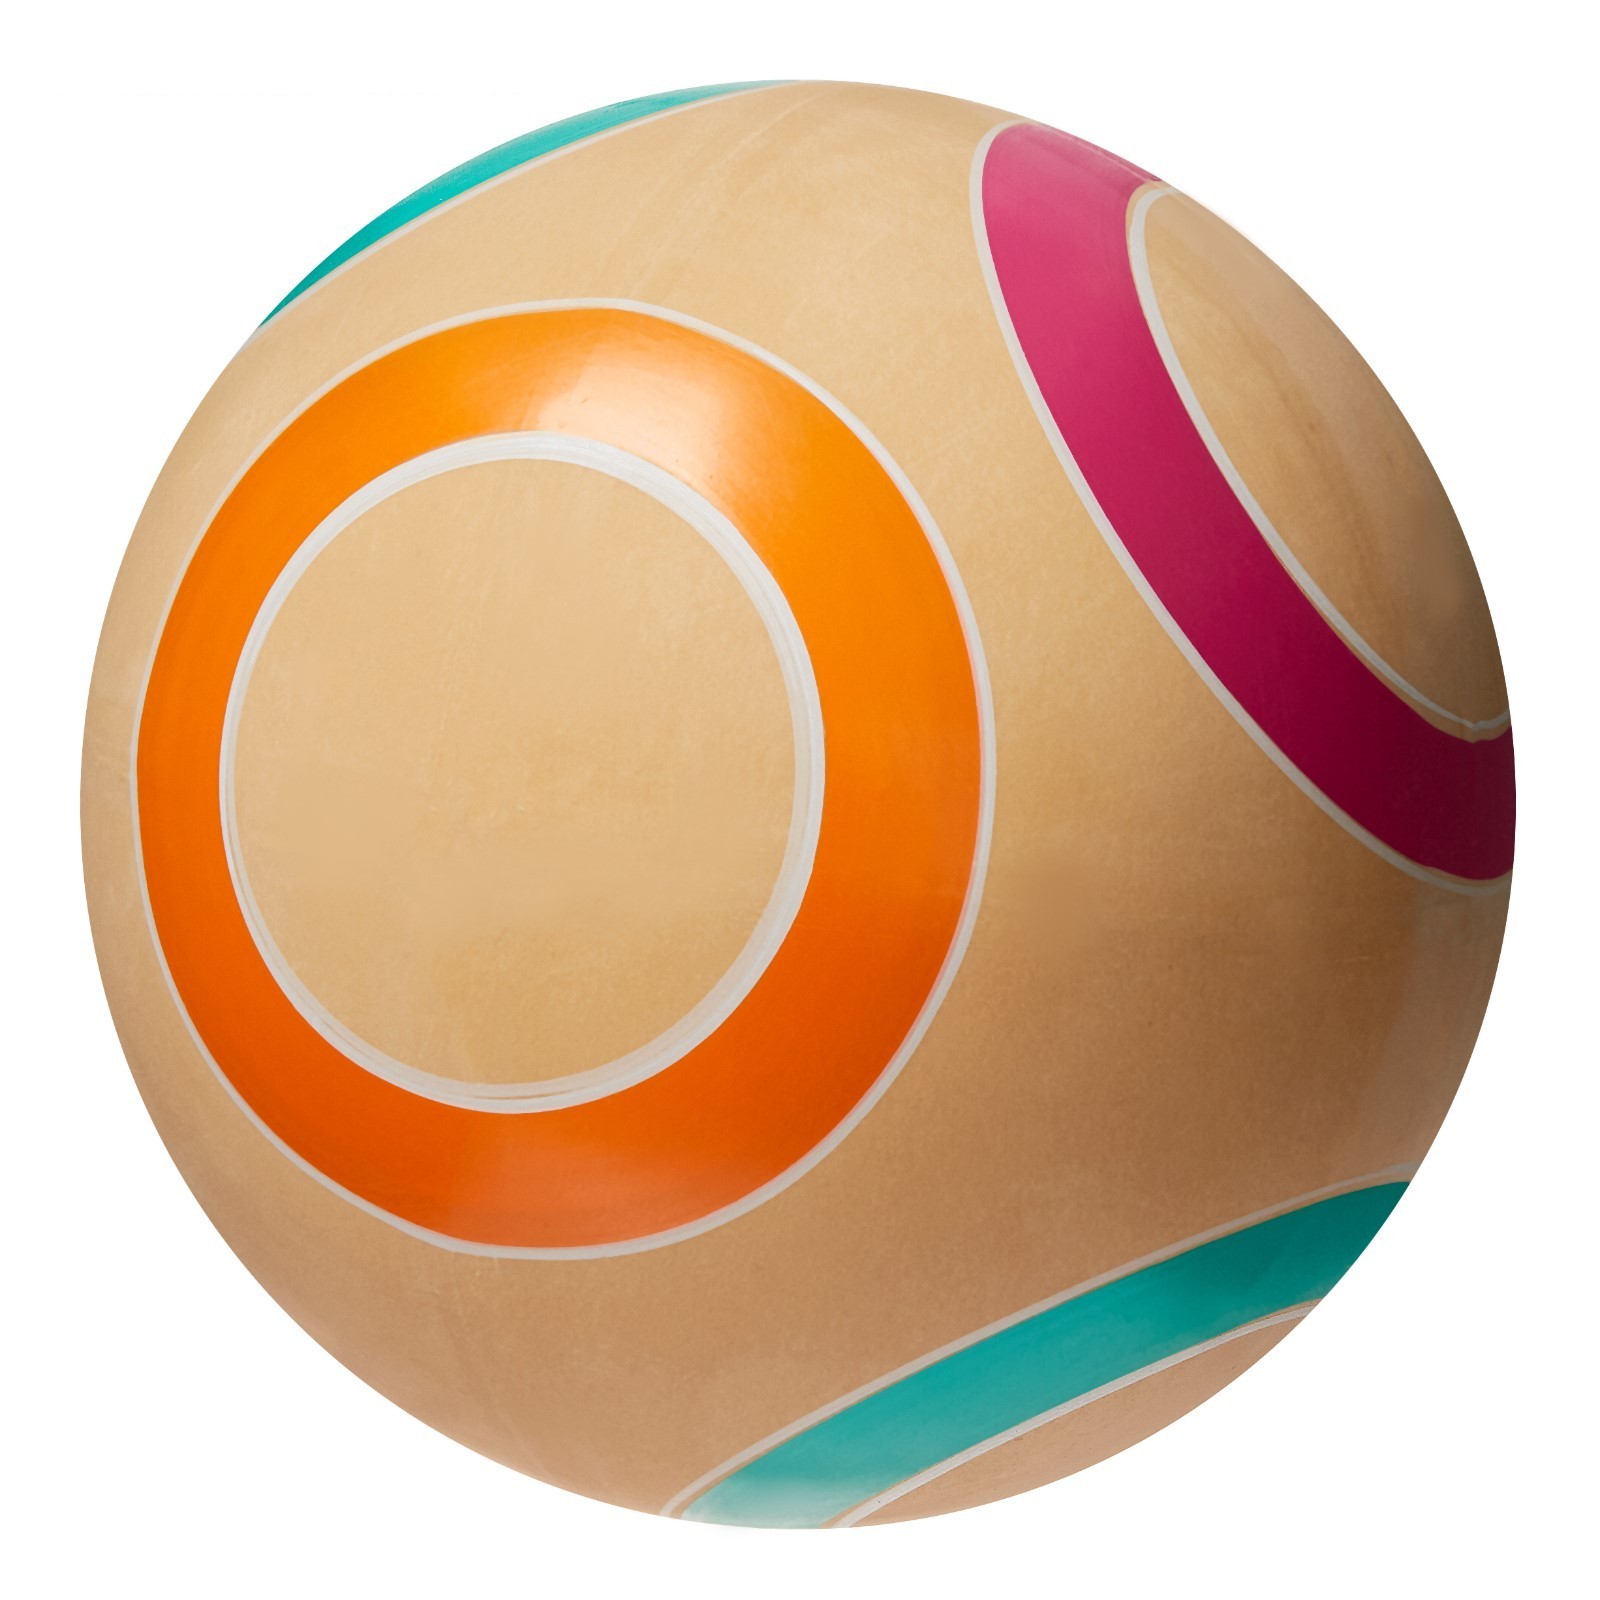 Мяч «сатурн эко», диаметр 12,5 см, цвета микс